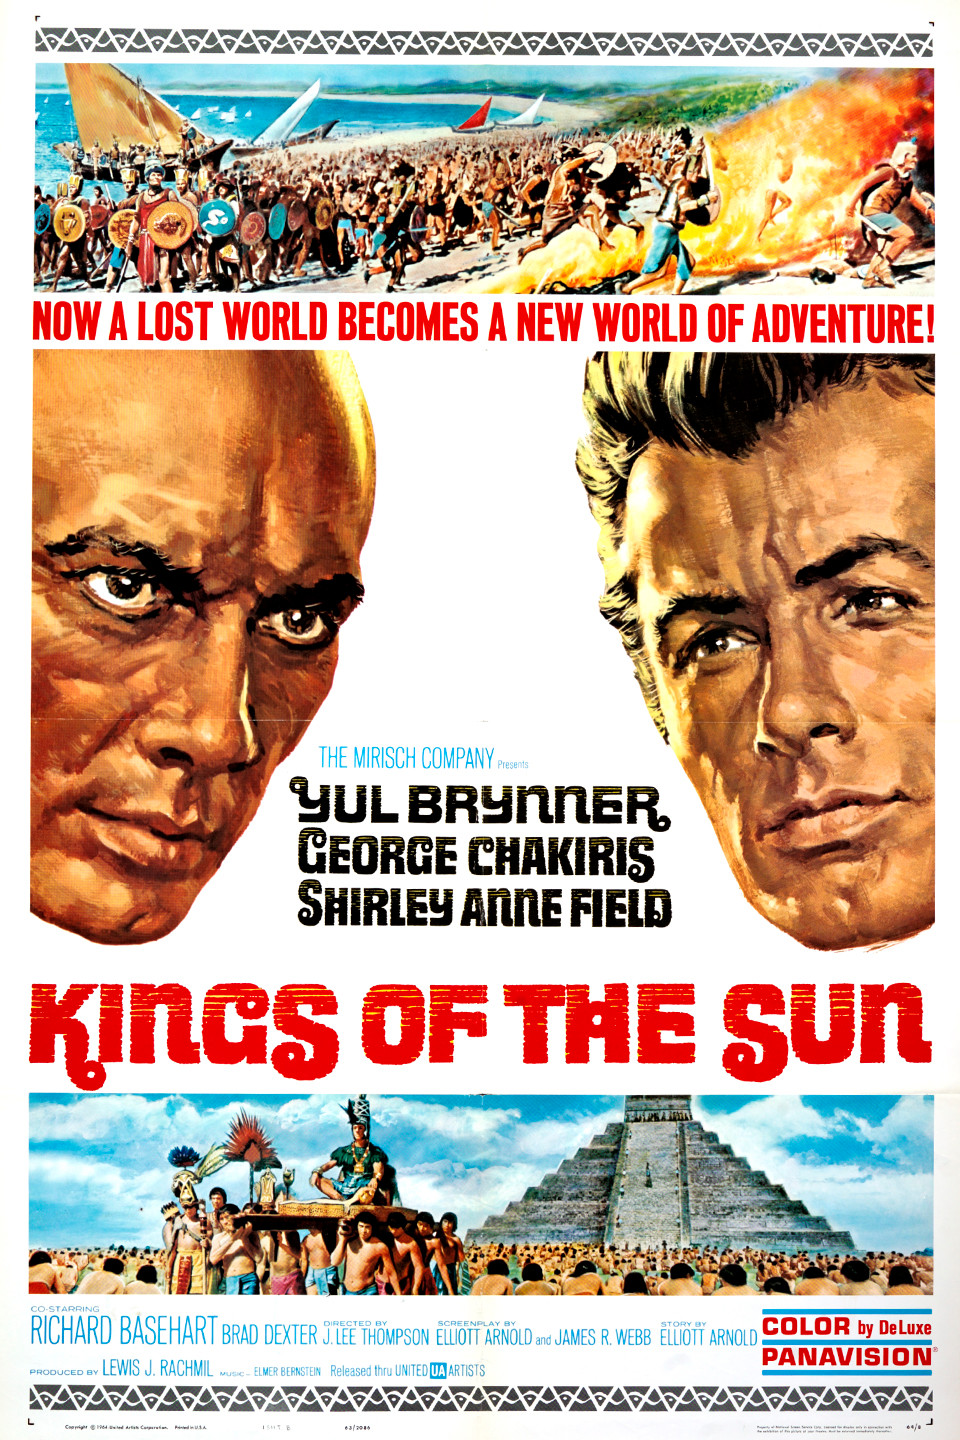 Nonton film Kings of the Sun layarkaca21 indoxx1 ganool online streaming terbaru